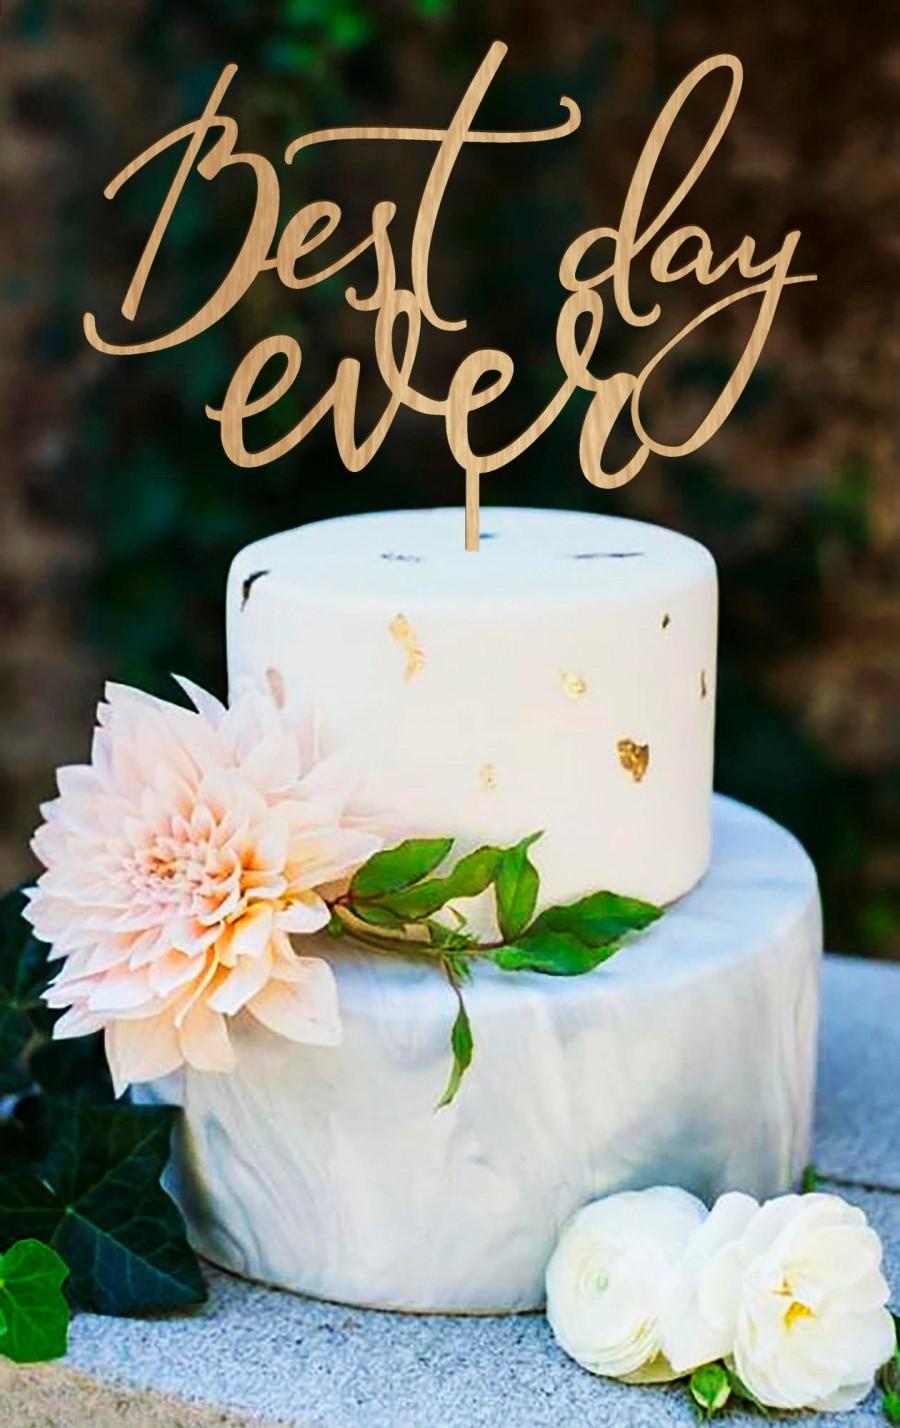 Wedding - Wedding Cake Topper, Best Day Ever, Cake Topper, Custom Cake Topper, Rustic Cake Topper, Gold Cake Topper, Best Day Ever, Wedding Topper